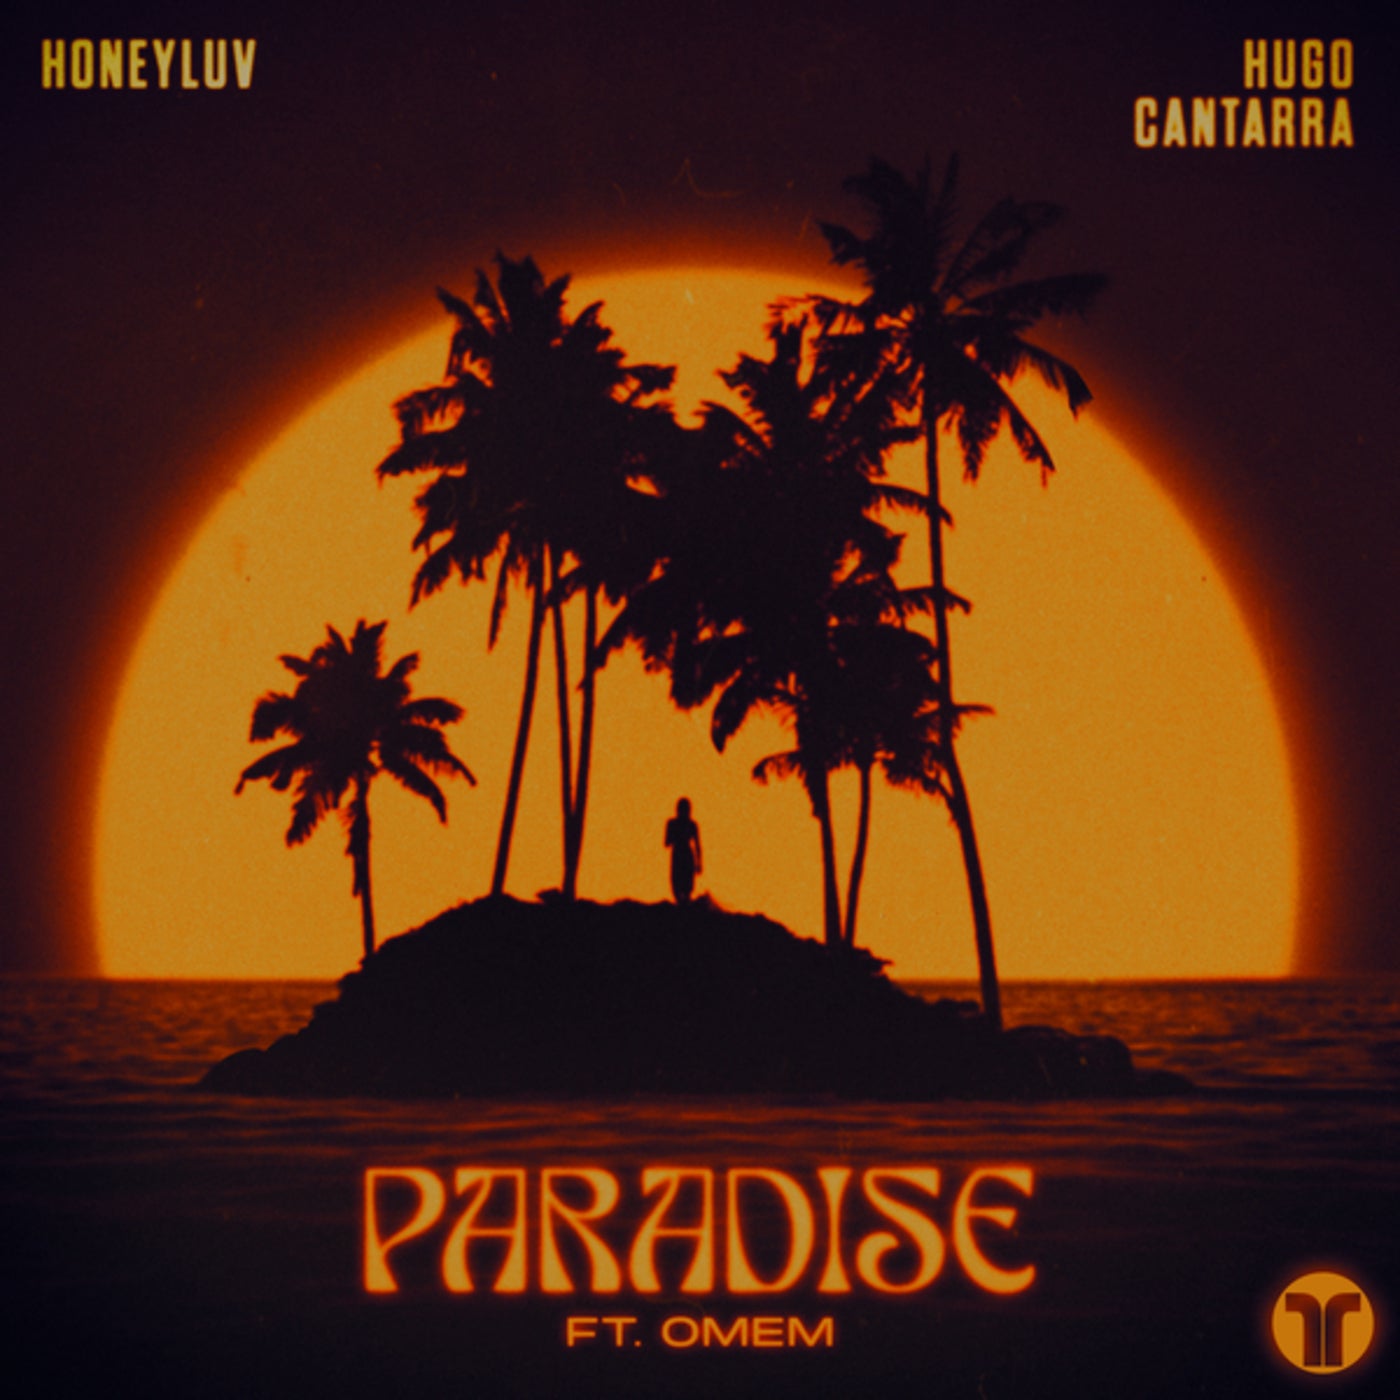 Hugo Cantarra & HoneyLuv feat. Omem - Paradise (Extended Mix)